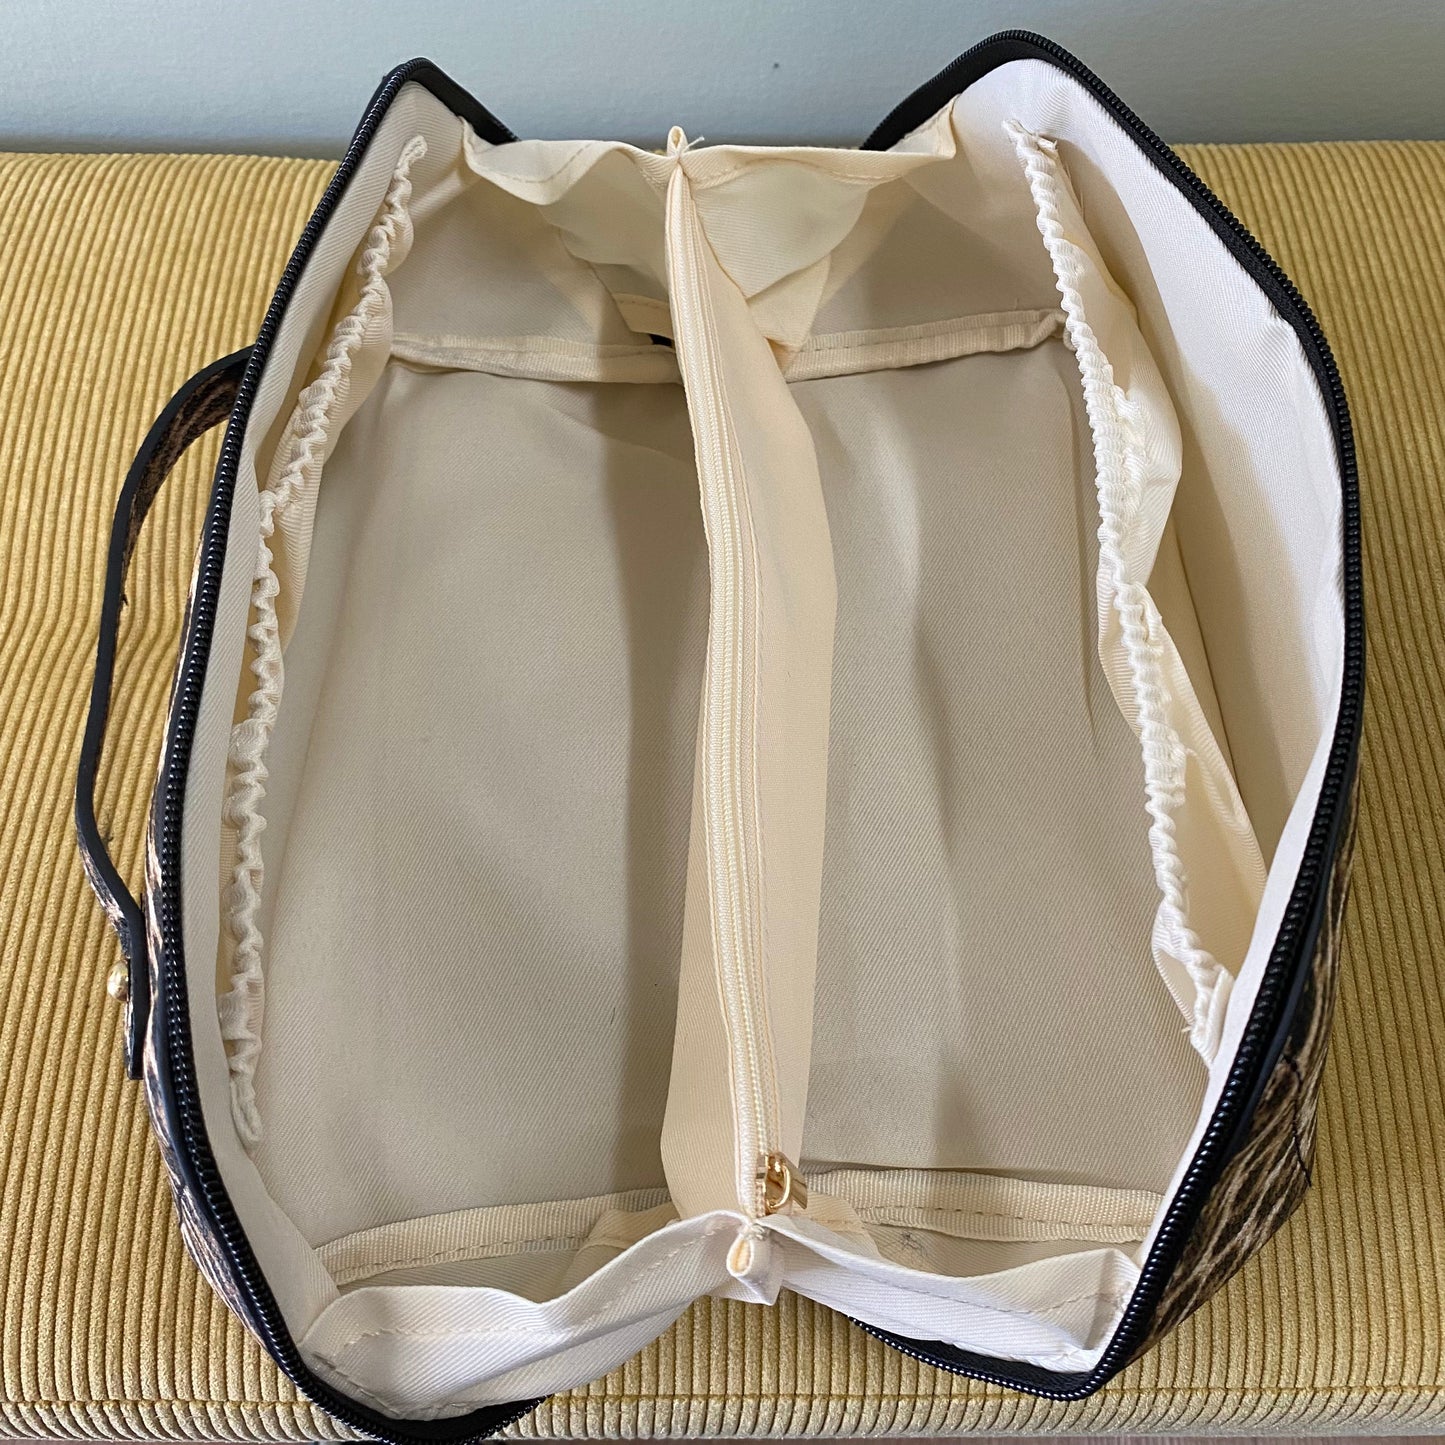 Oversized Lay Flat Cosmetic Bag, Animal Print - PREORDER